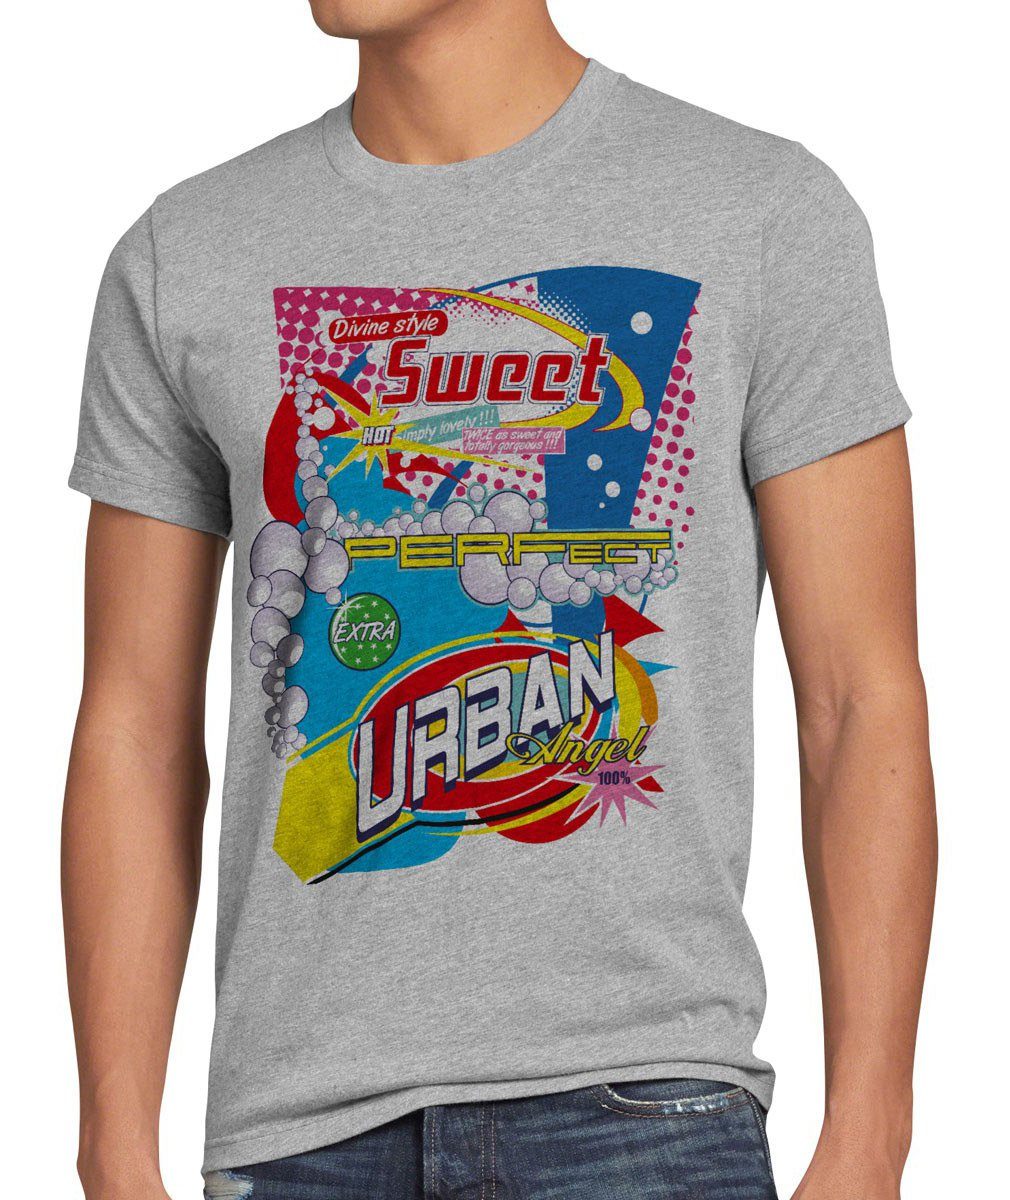 style3 Print-Shirt Herren T-Shirt Urban Art retro 80er bunt nein waschmittel grafik wäsche werbung grau meliert